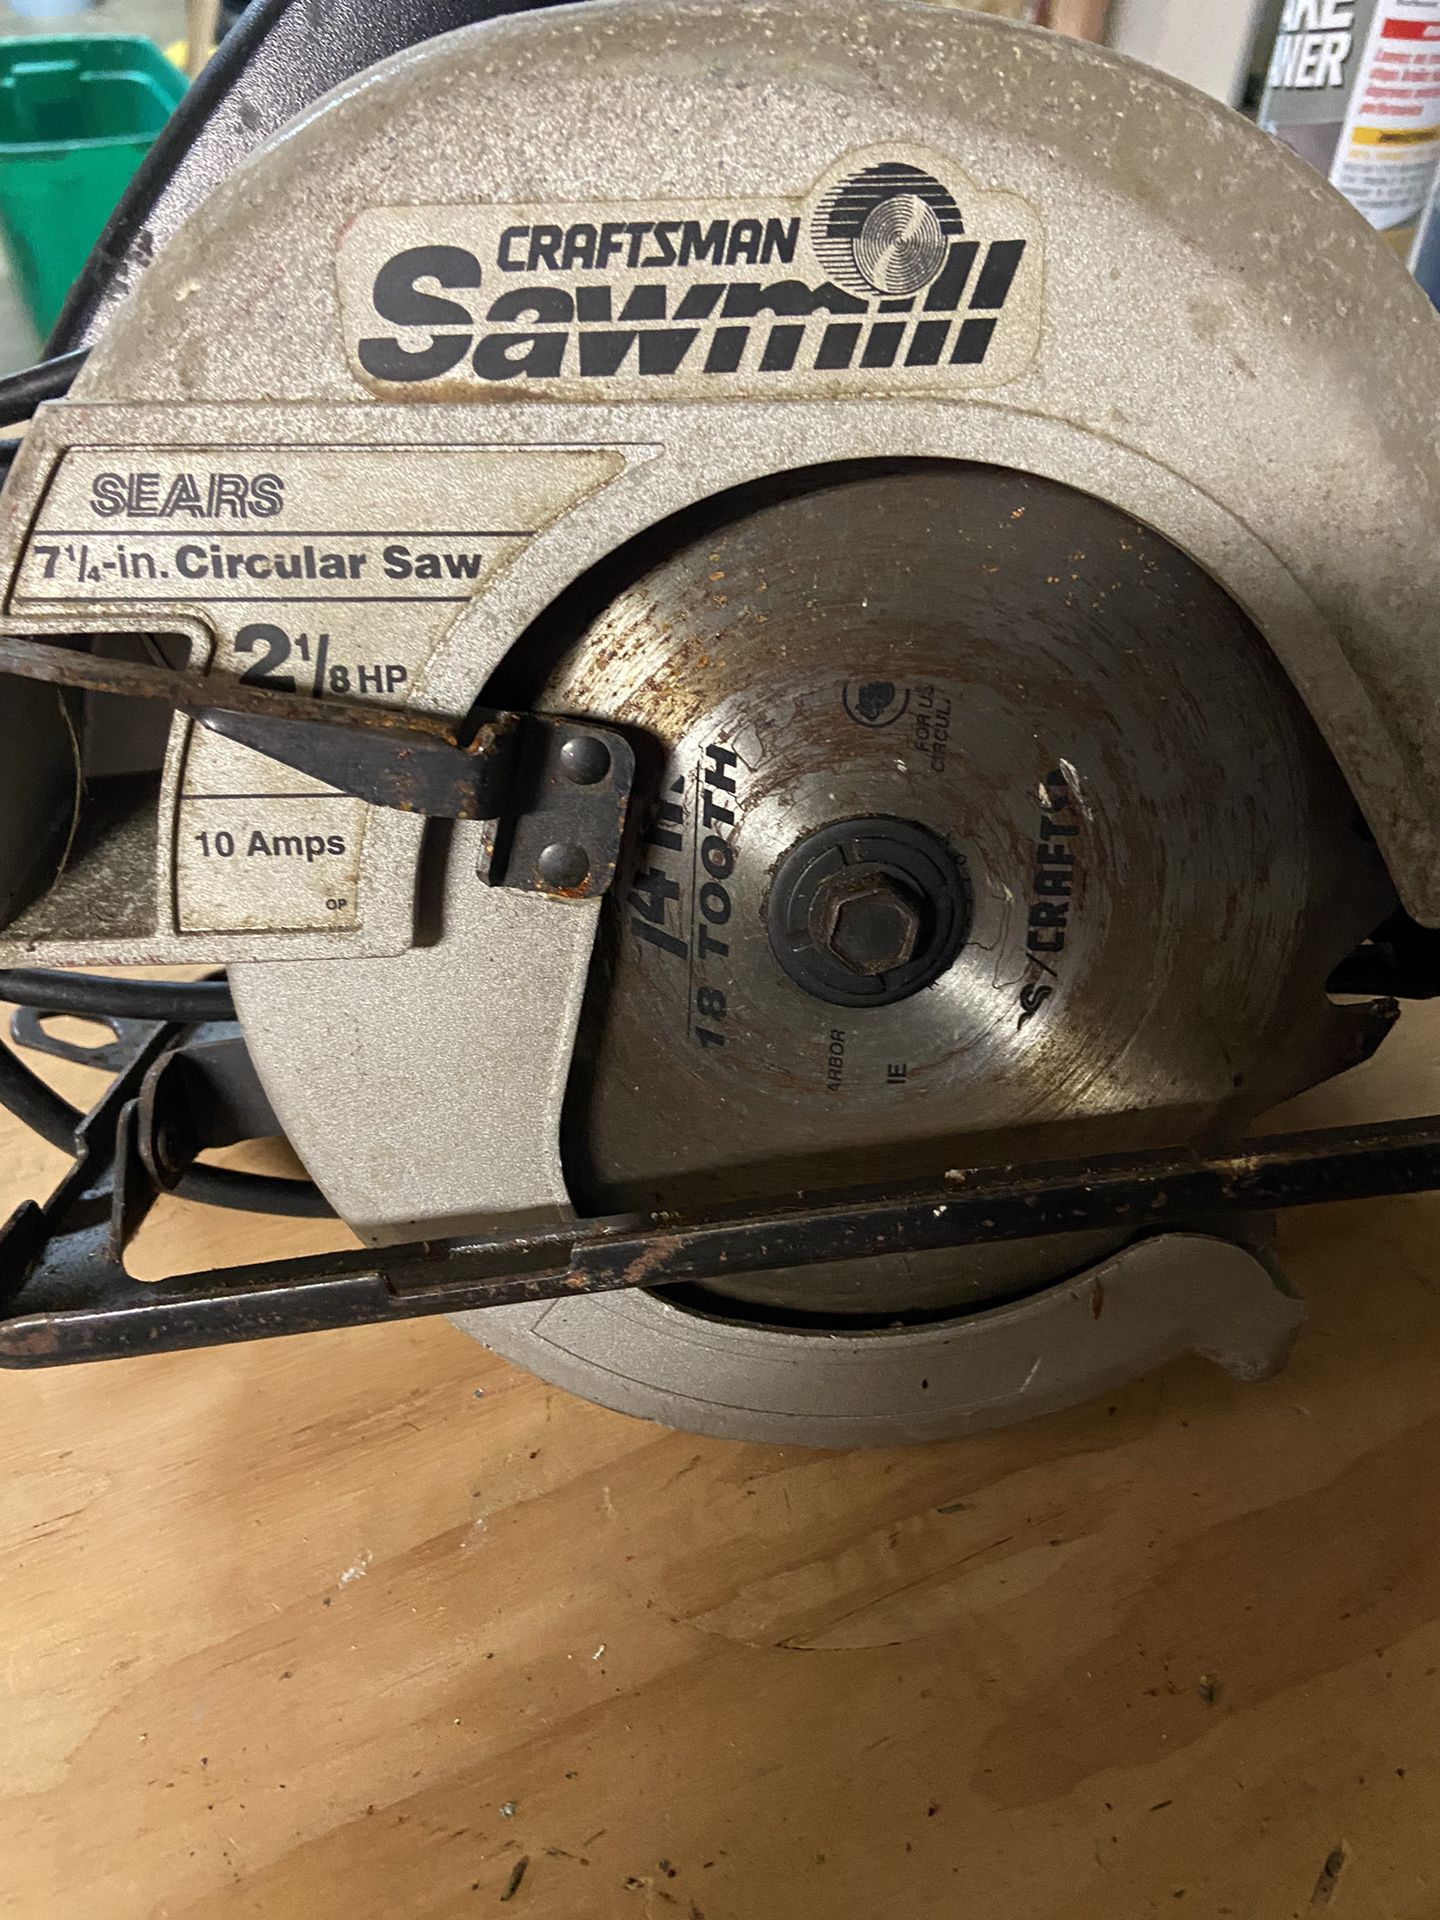 Sears craftsman 7 1/4” Circular Saw